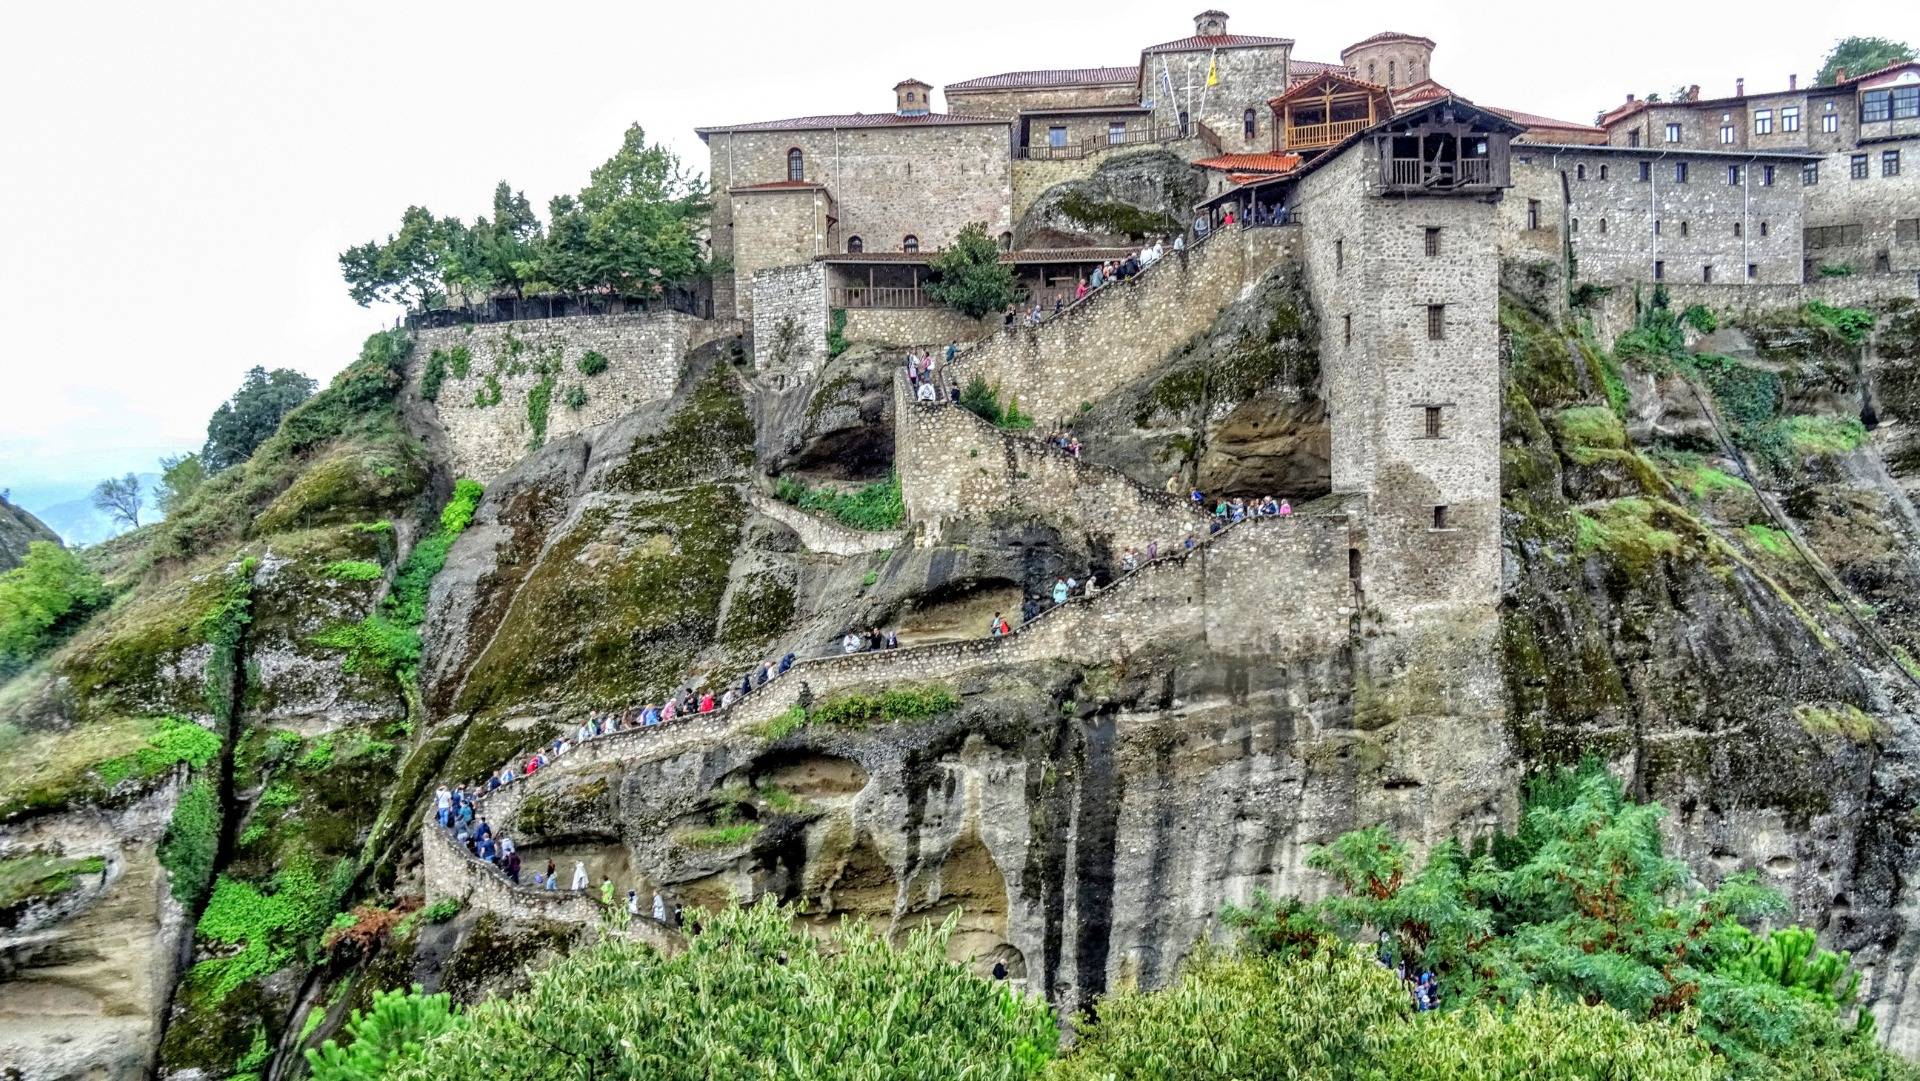 Tourists are flood the monastery